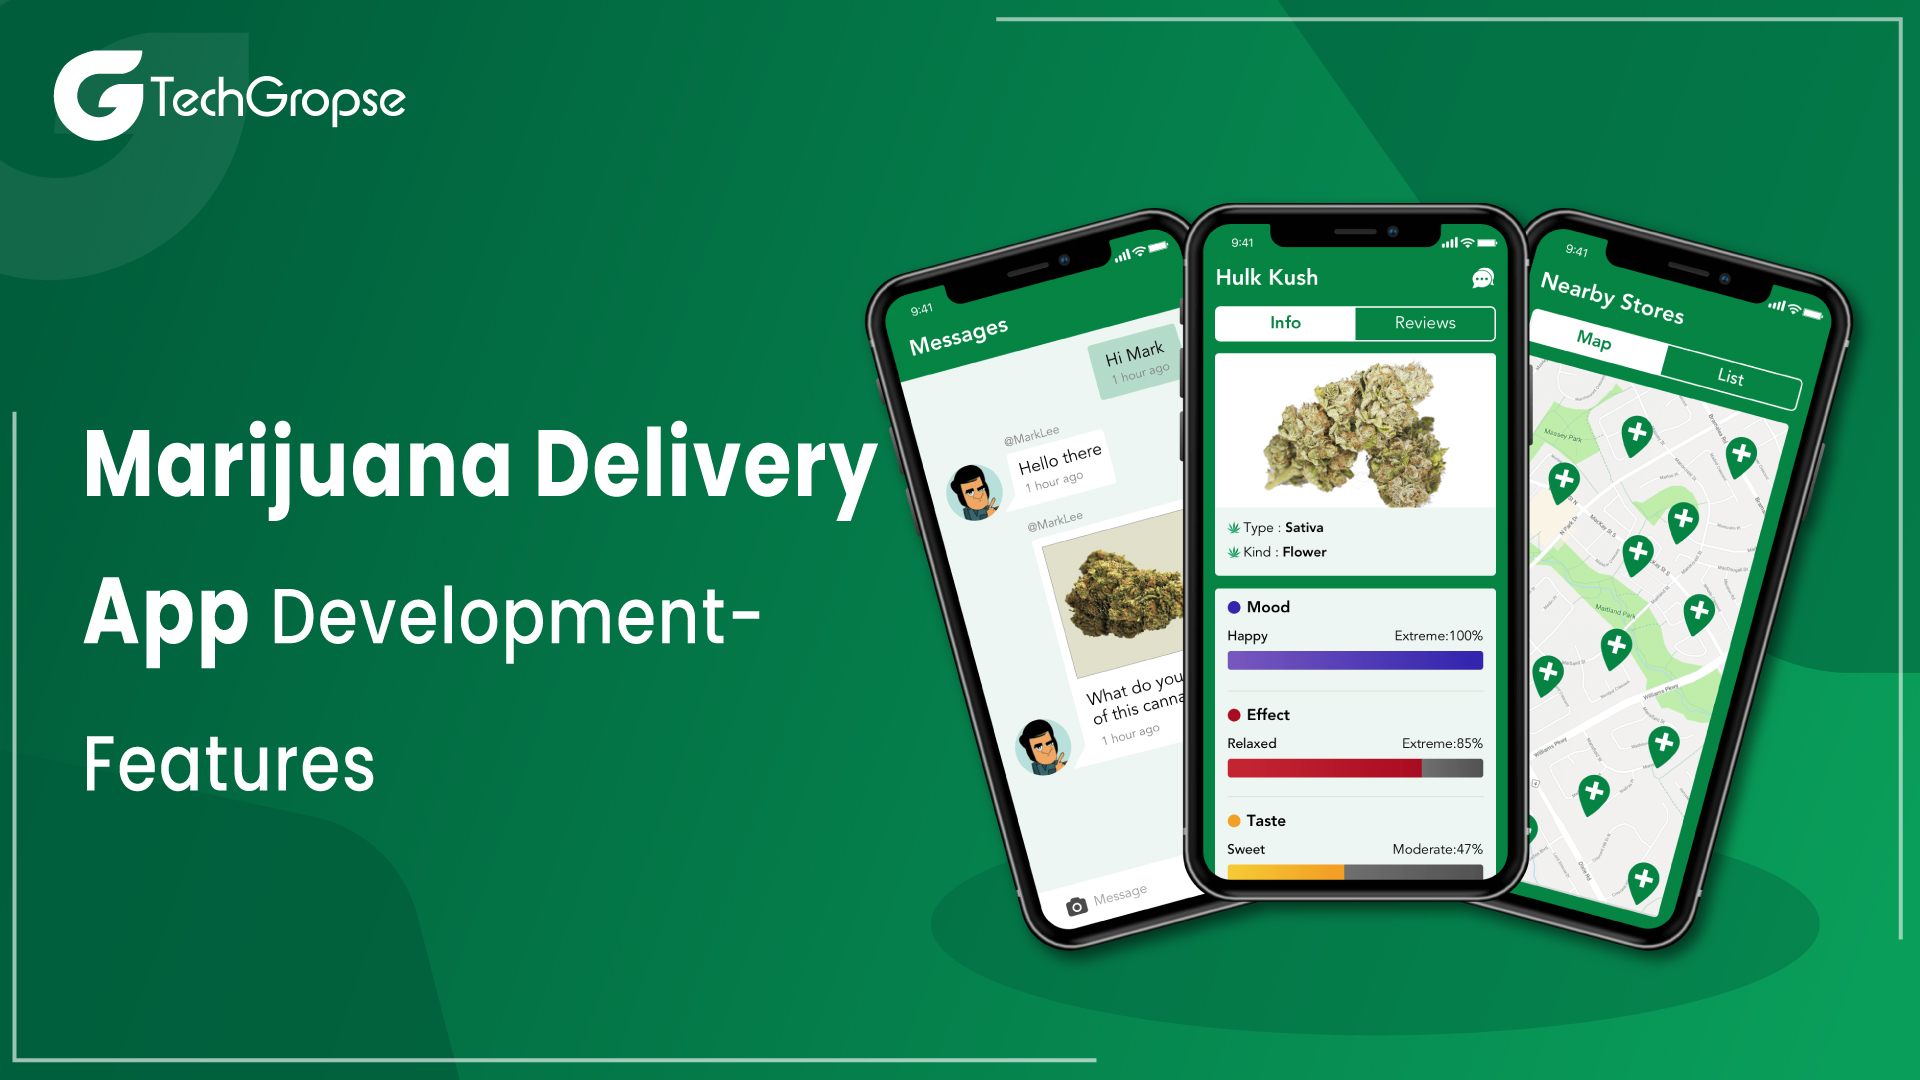 Features of a Marijuana App